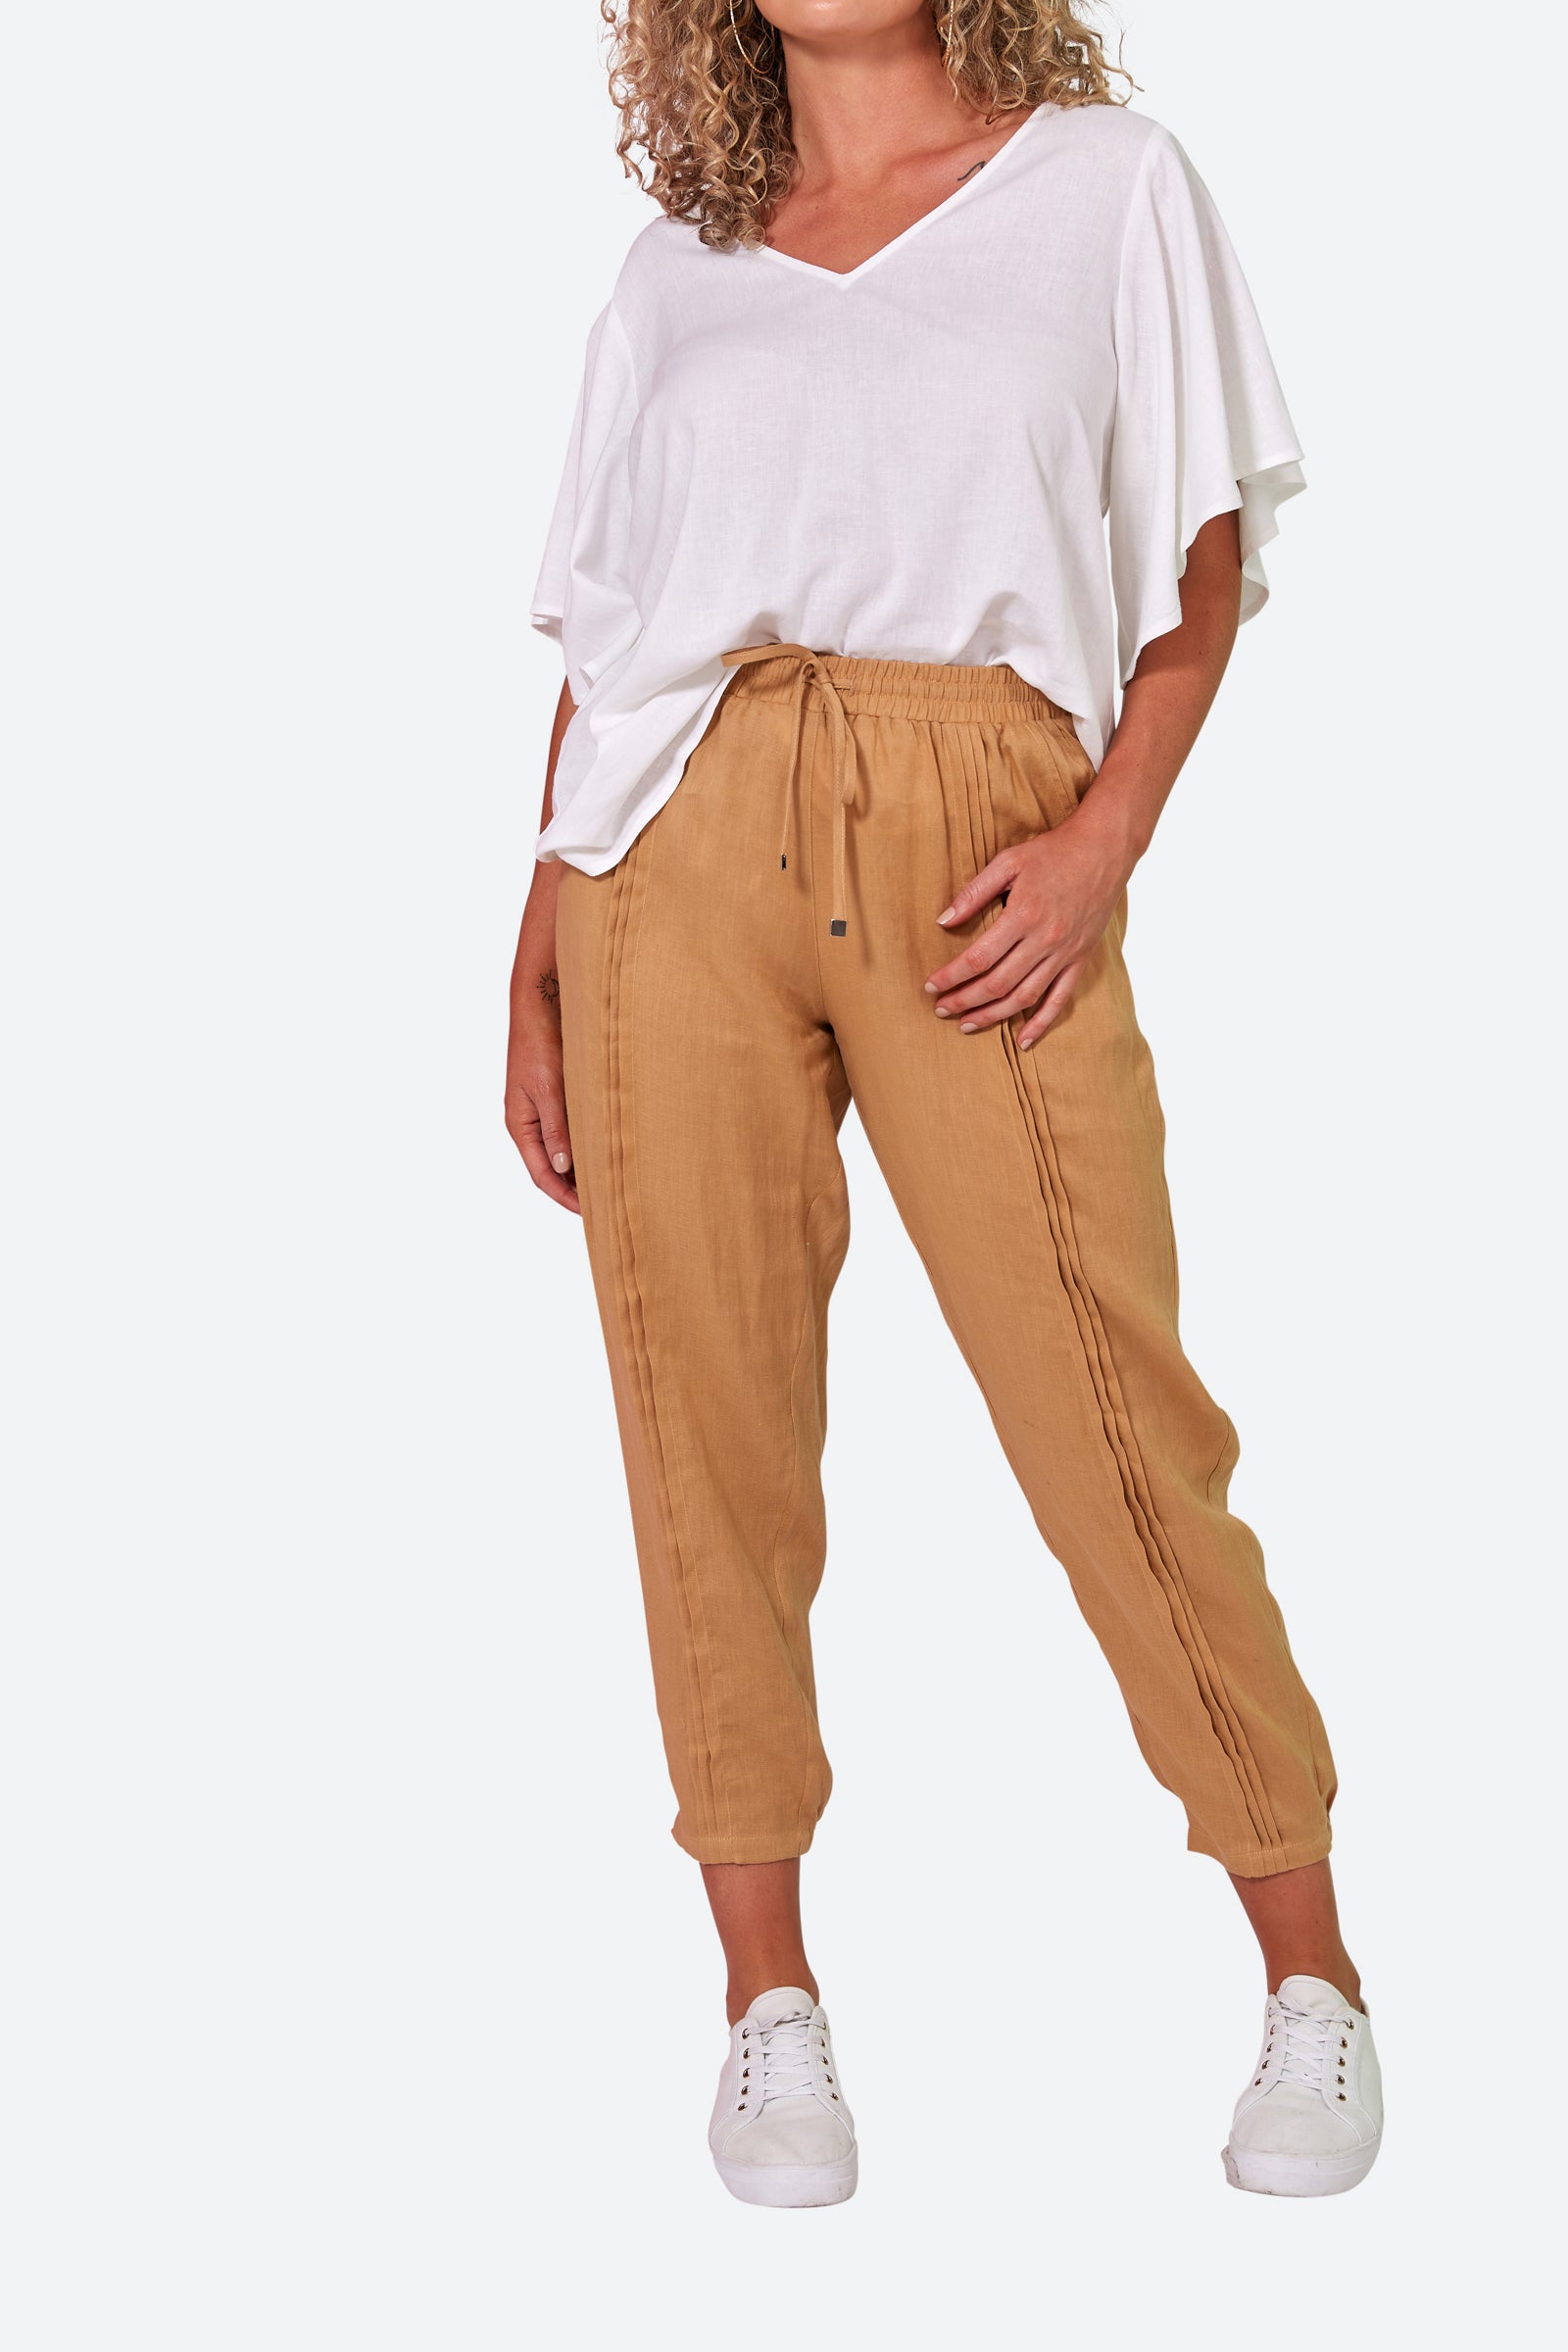 La Vie Pintuck Pant - Caramel - eb&ive Clothing - Pant Relaxed Linen